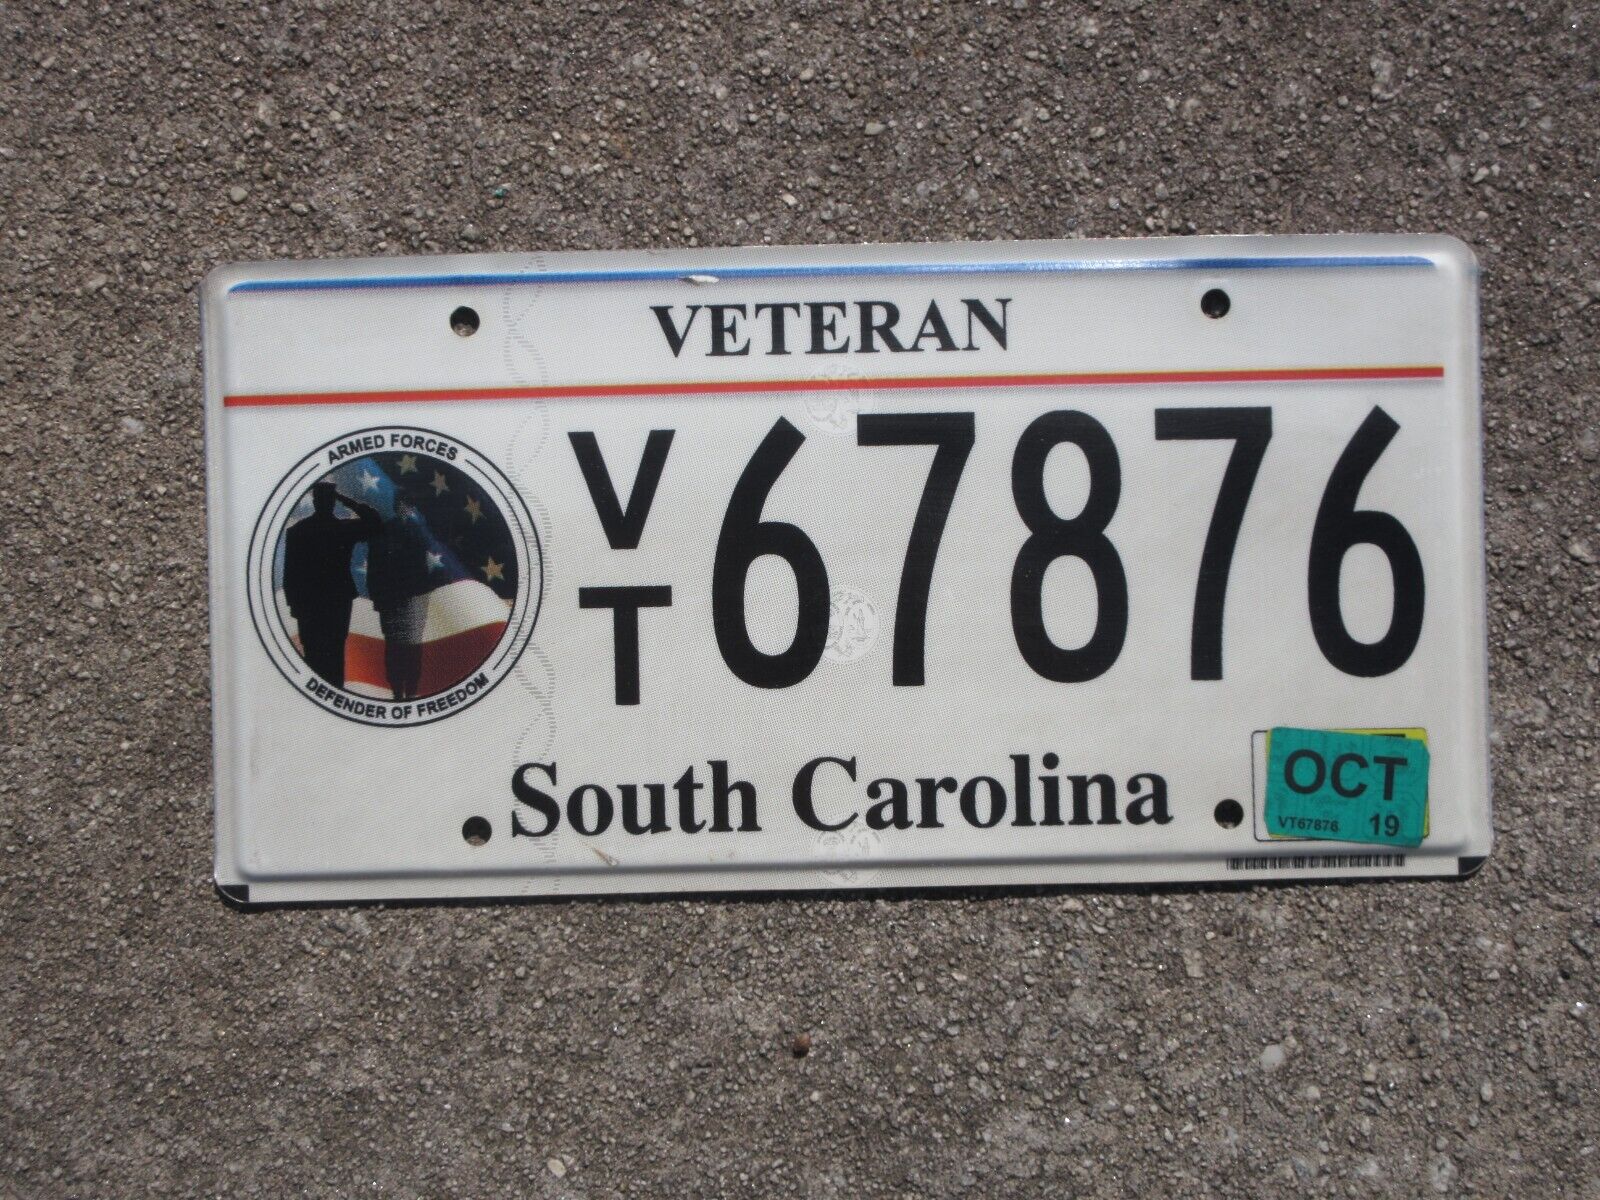 South Carolina Veteran License Plate Military Air Force Marines Navy SC VT7876